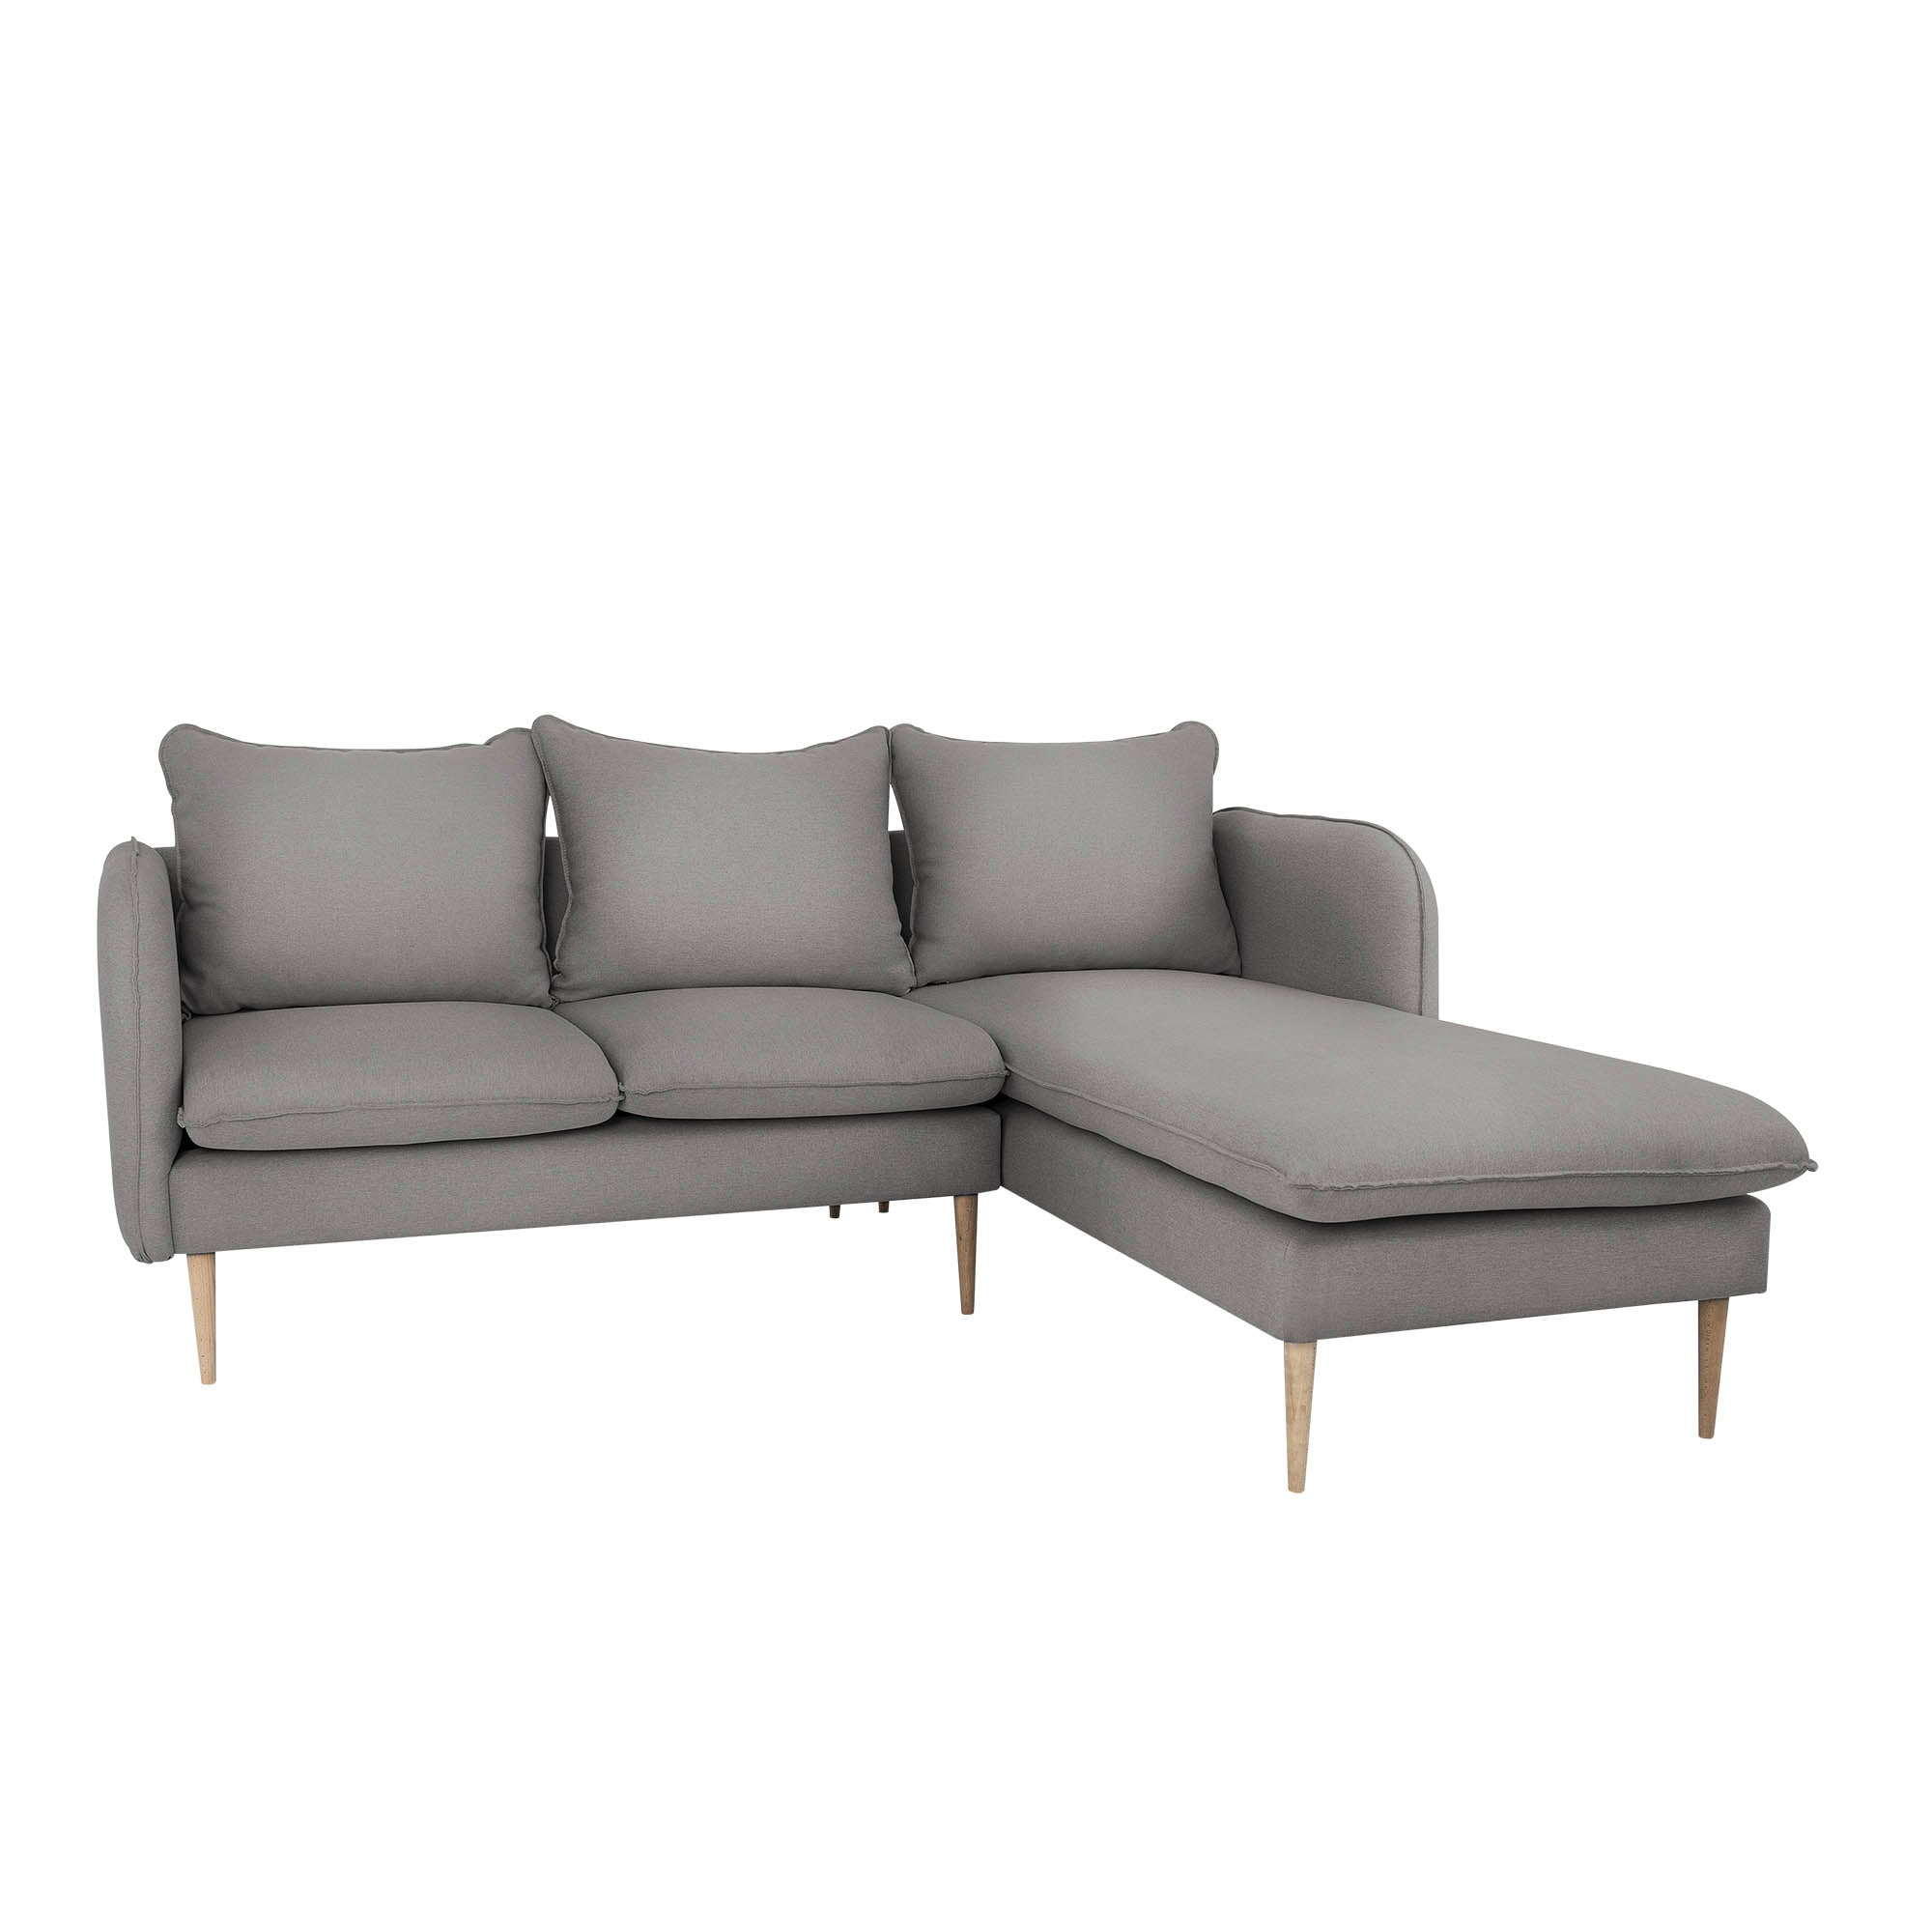 POSH WOOD Corner Sofa Right upholstery colour steel grey